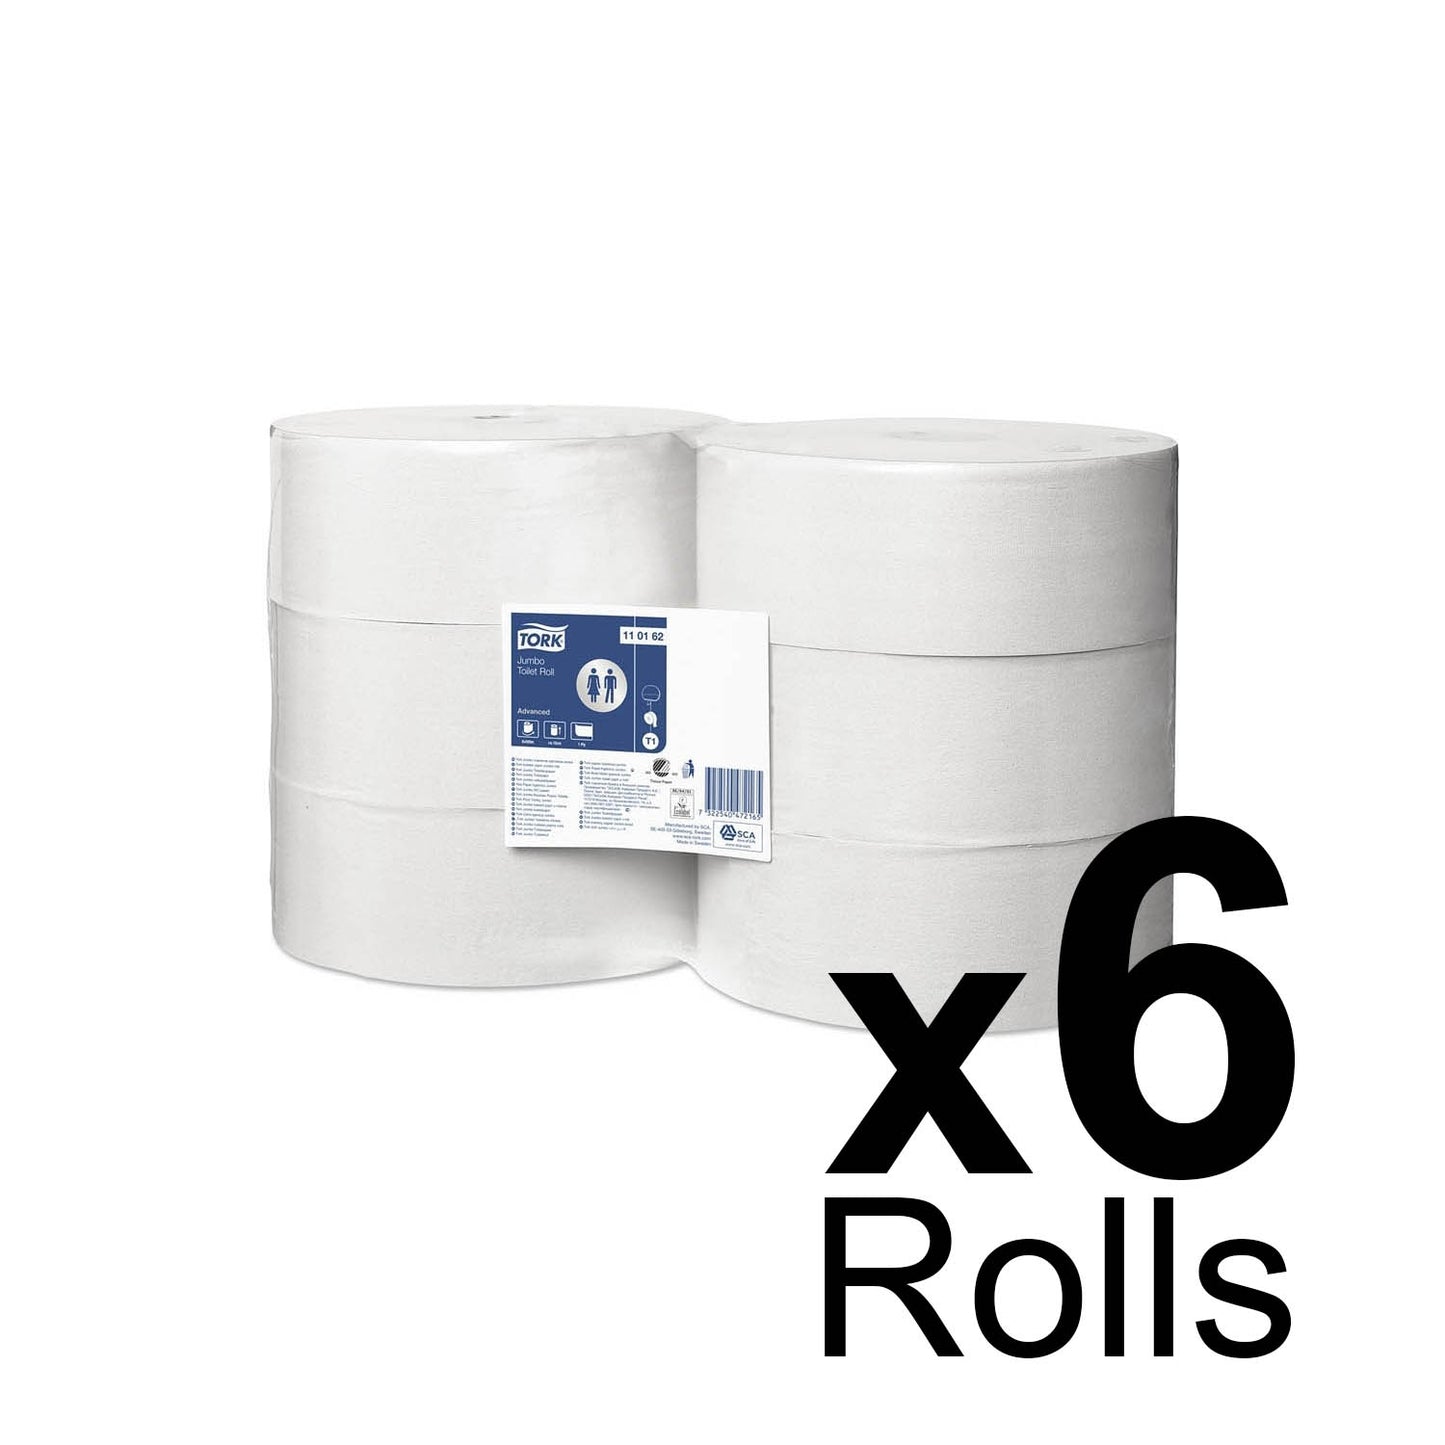 Tork Jumbo Toilet Roll Advanced 1 Ply - 110162 - Case of 6 x 500m